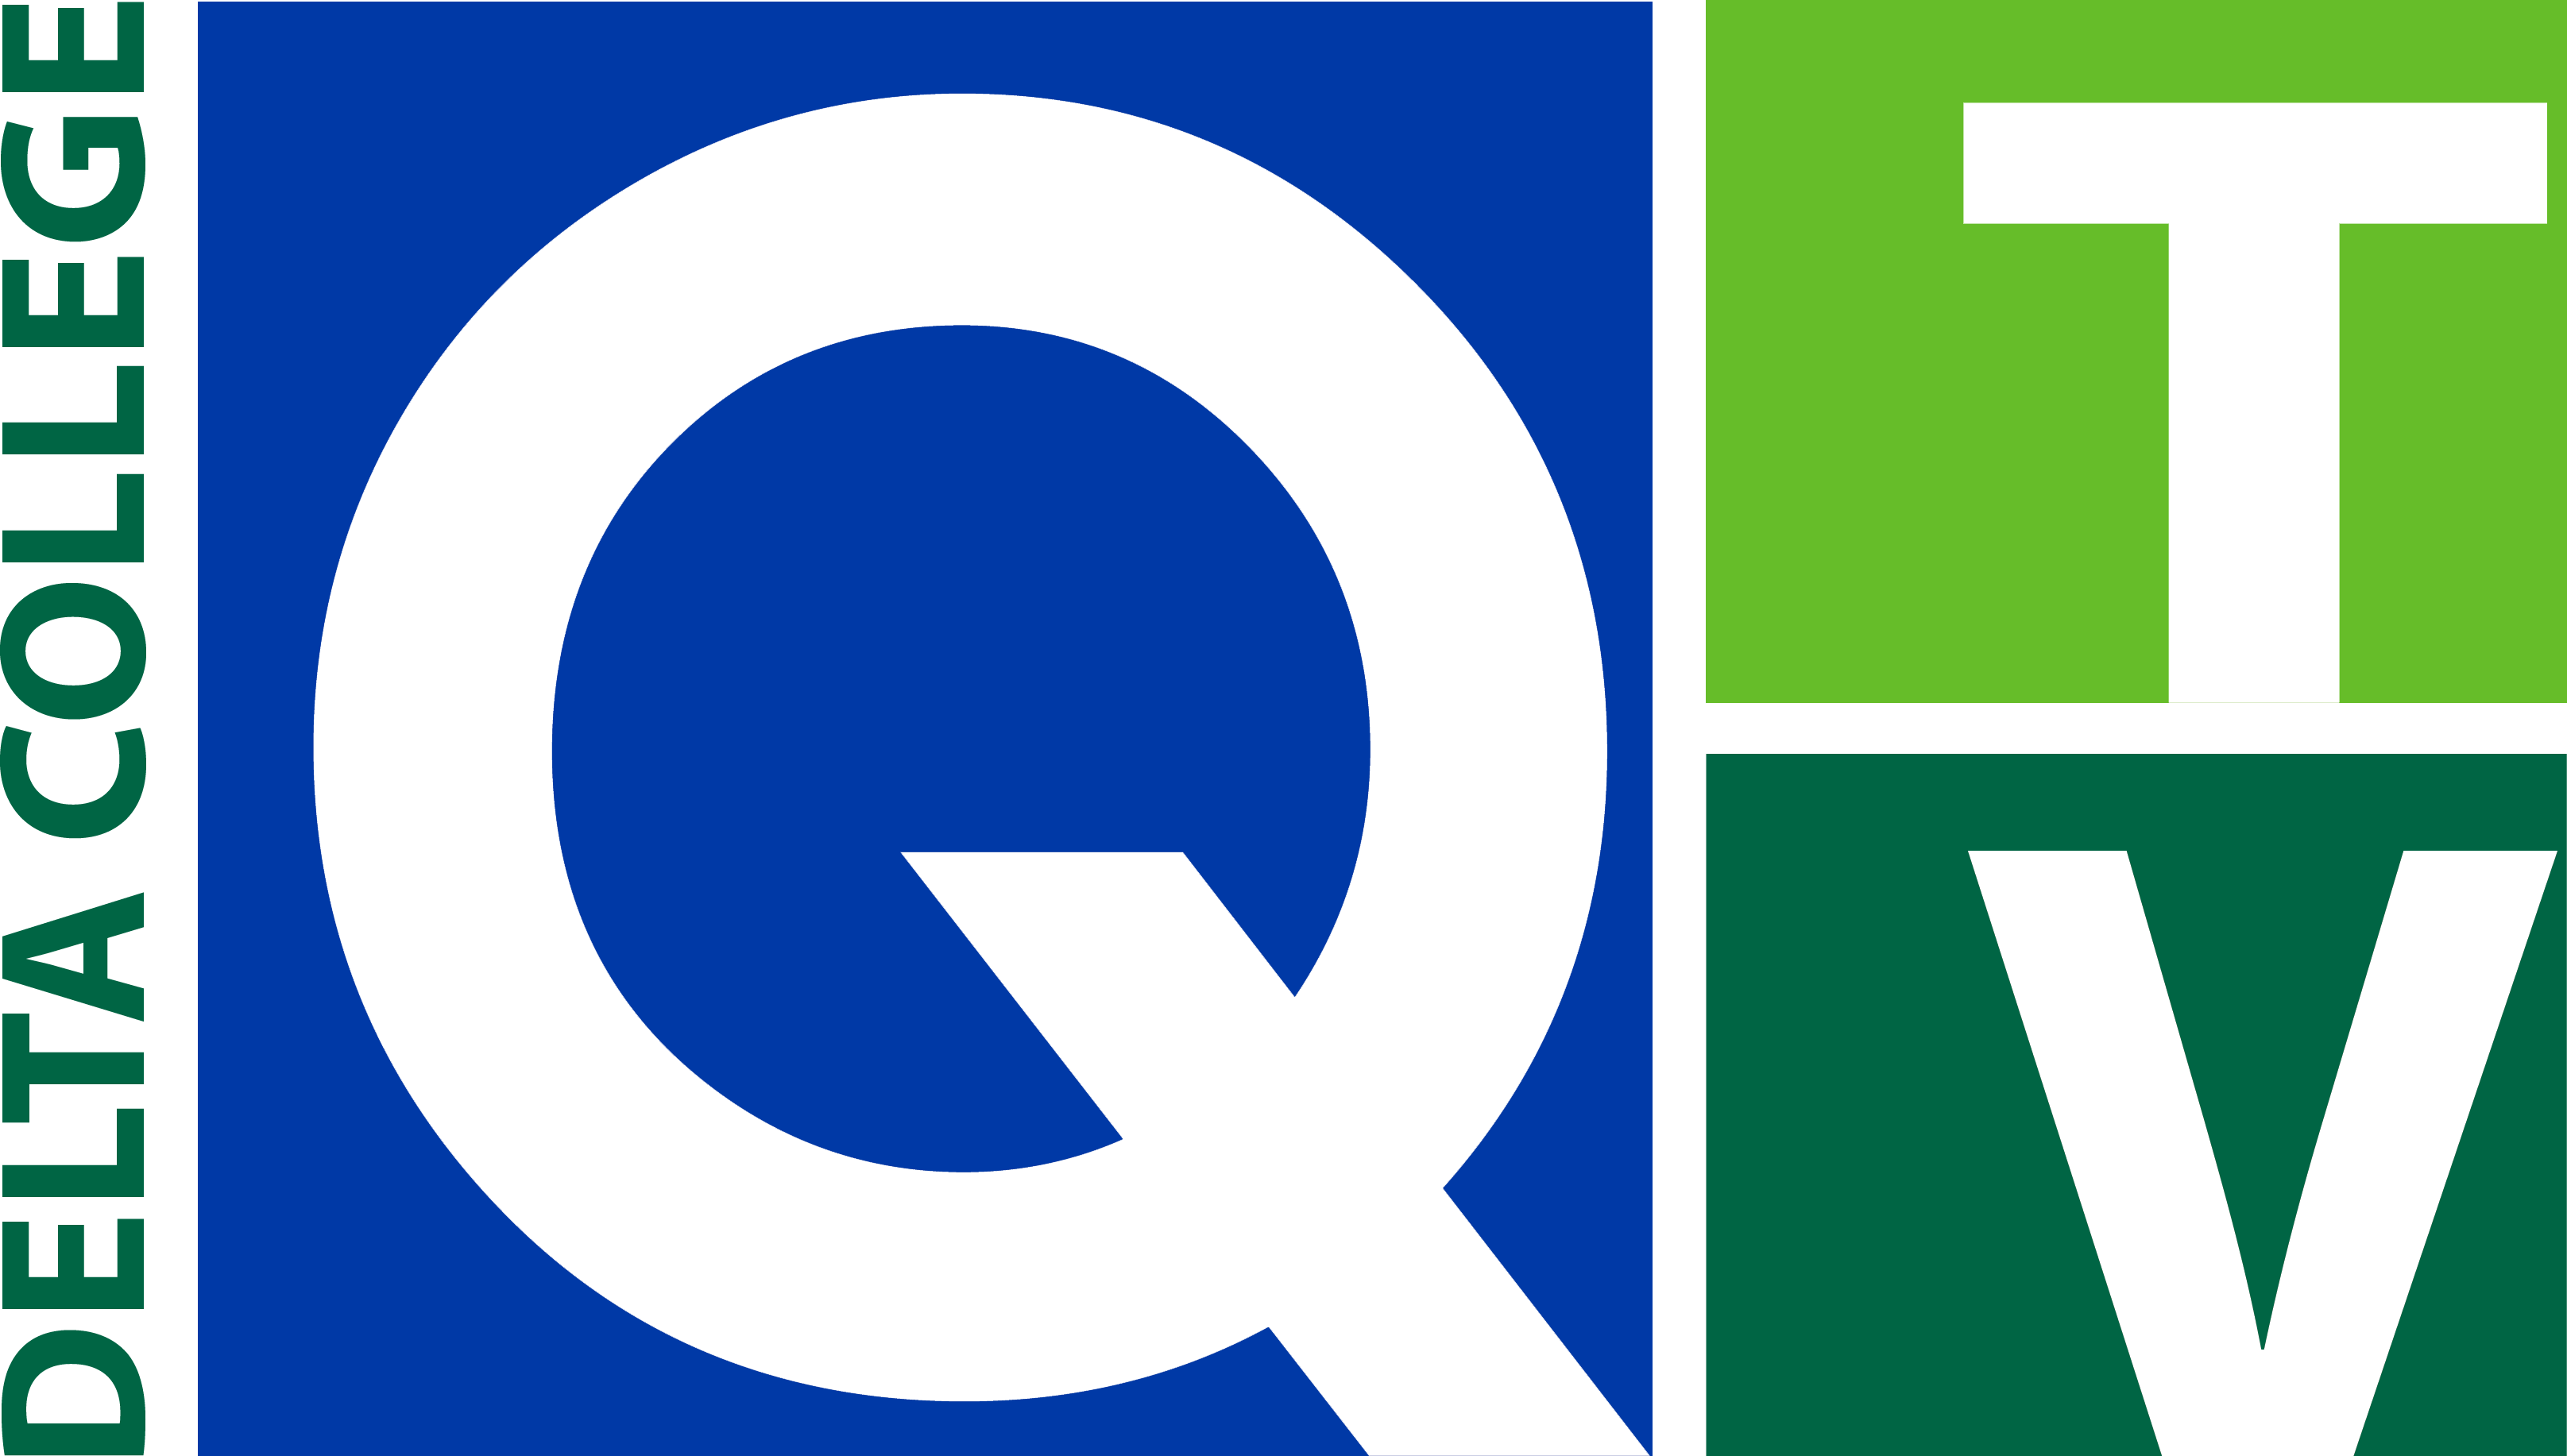 Green Q Logo - Brand Resources | Delta Broadcasting